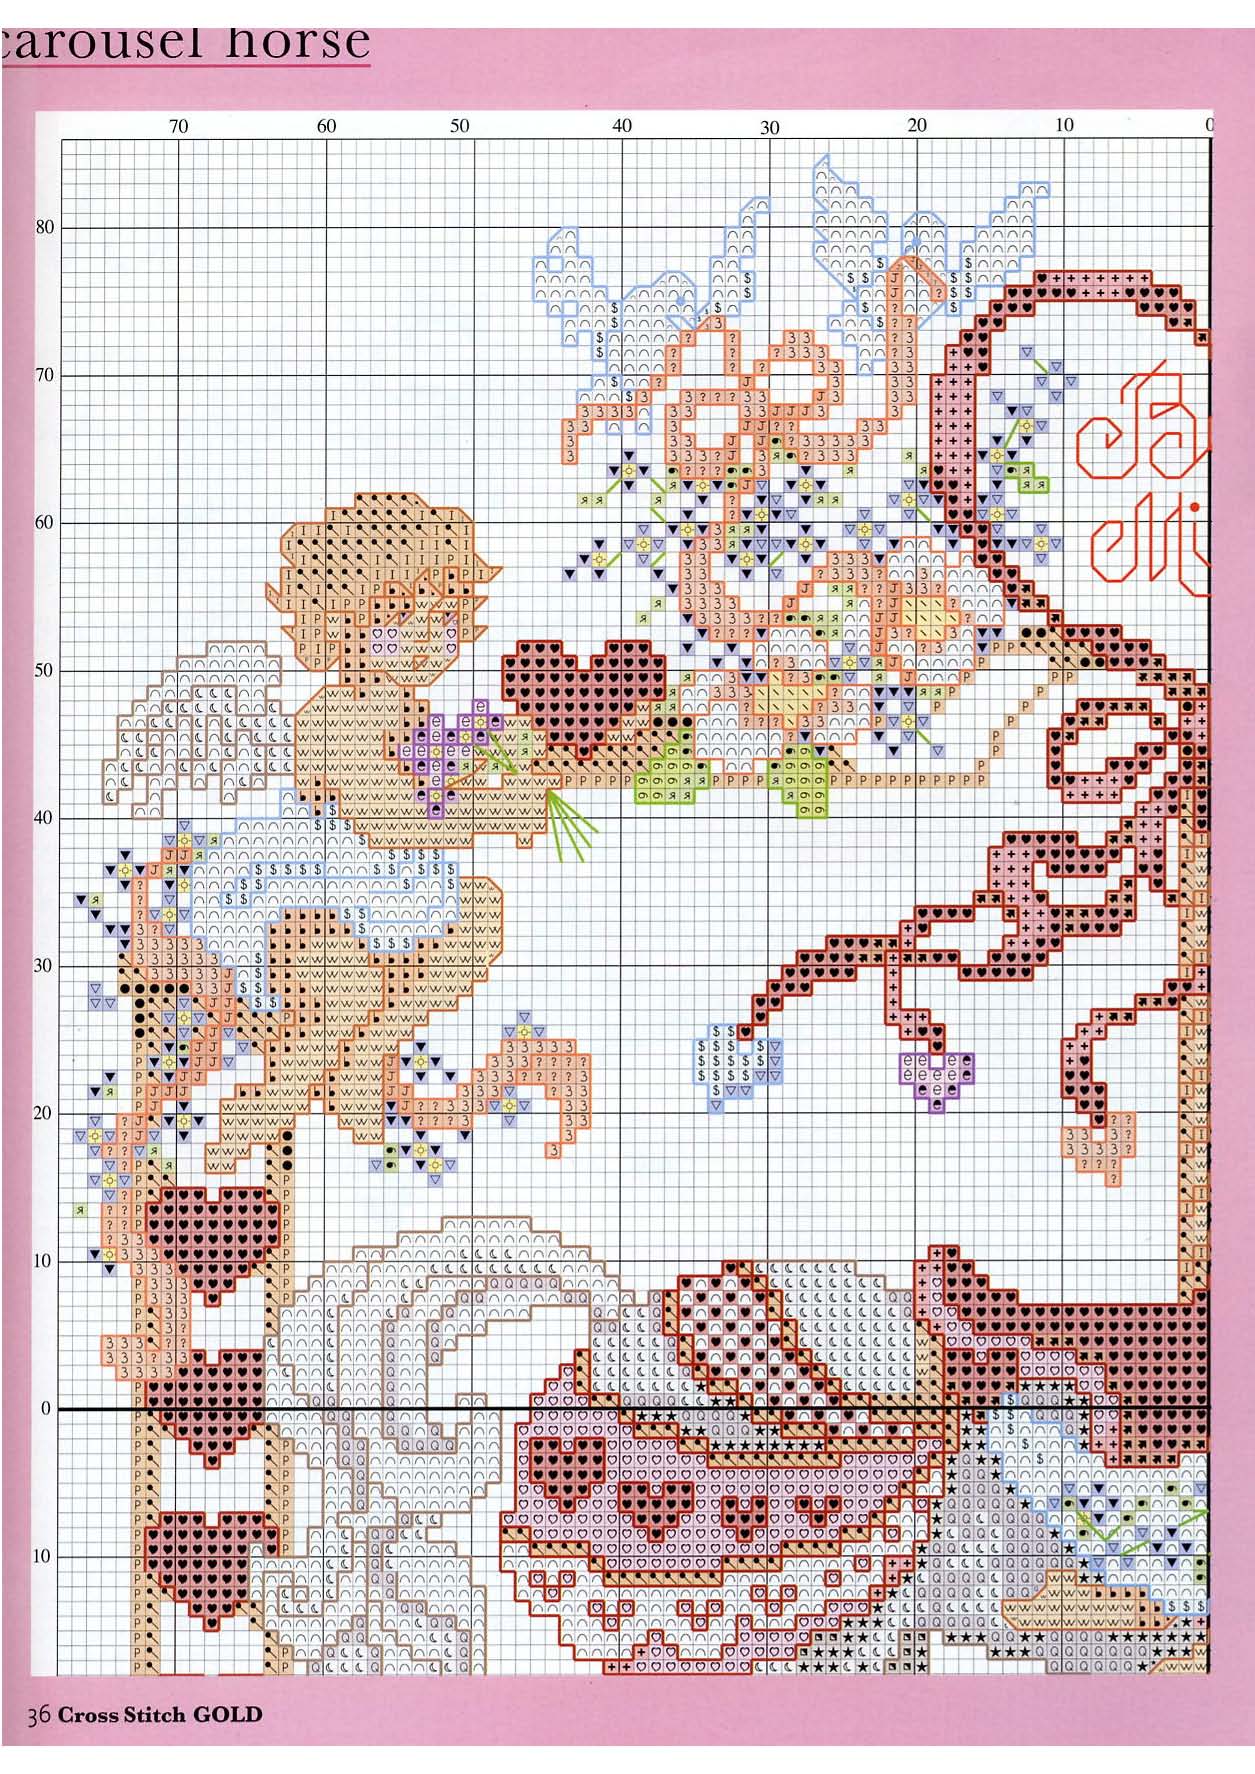 Valentine’ s Day toy carousel free cross stitch pattern (2)